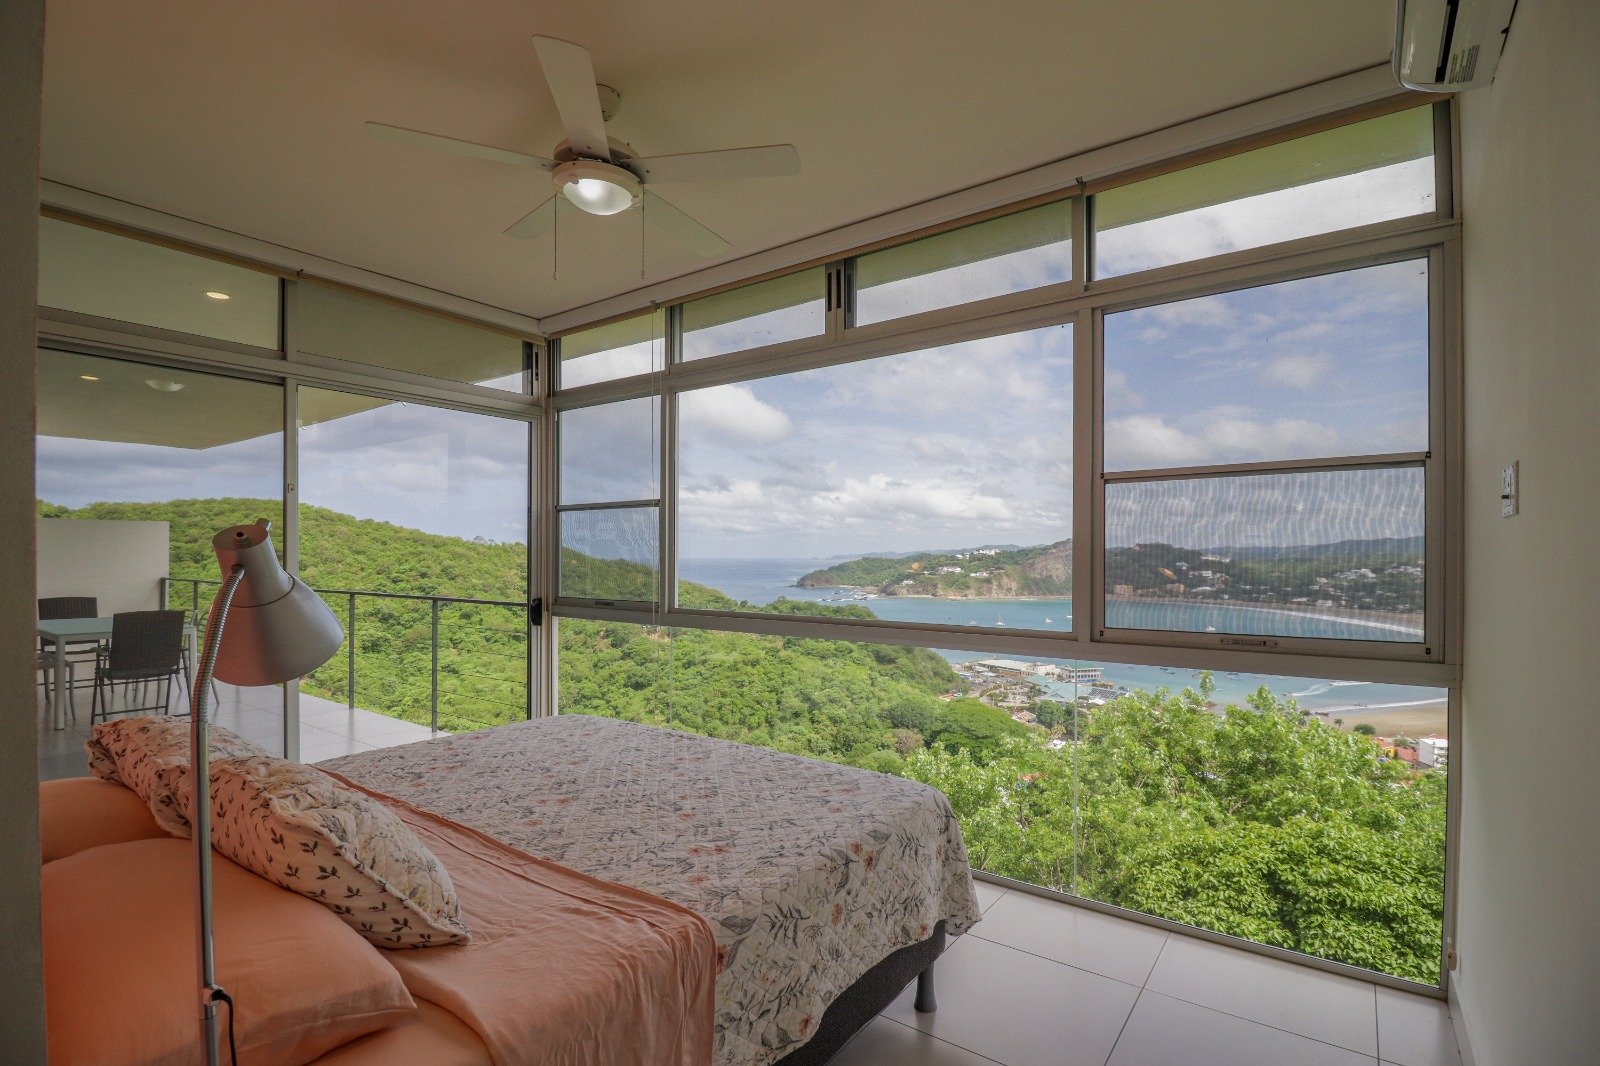 Two bedroom ocean view home for sale property real estate San Juan Del Sur (7).jpeg